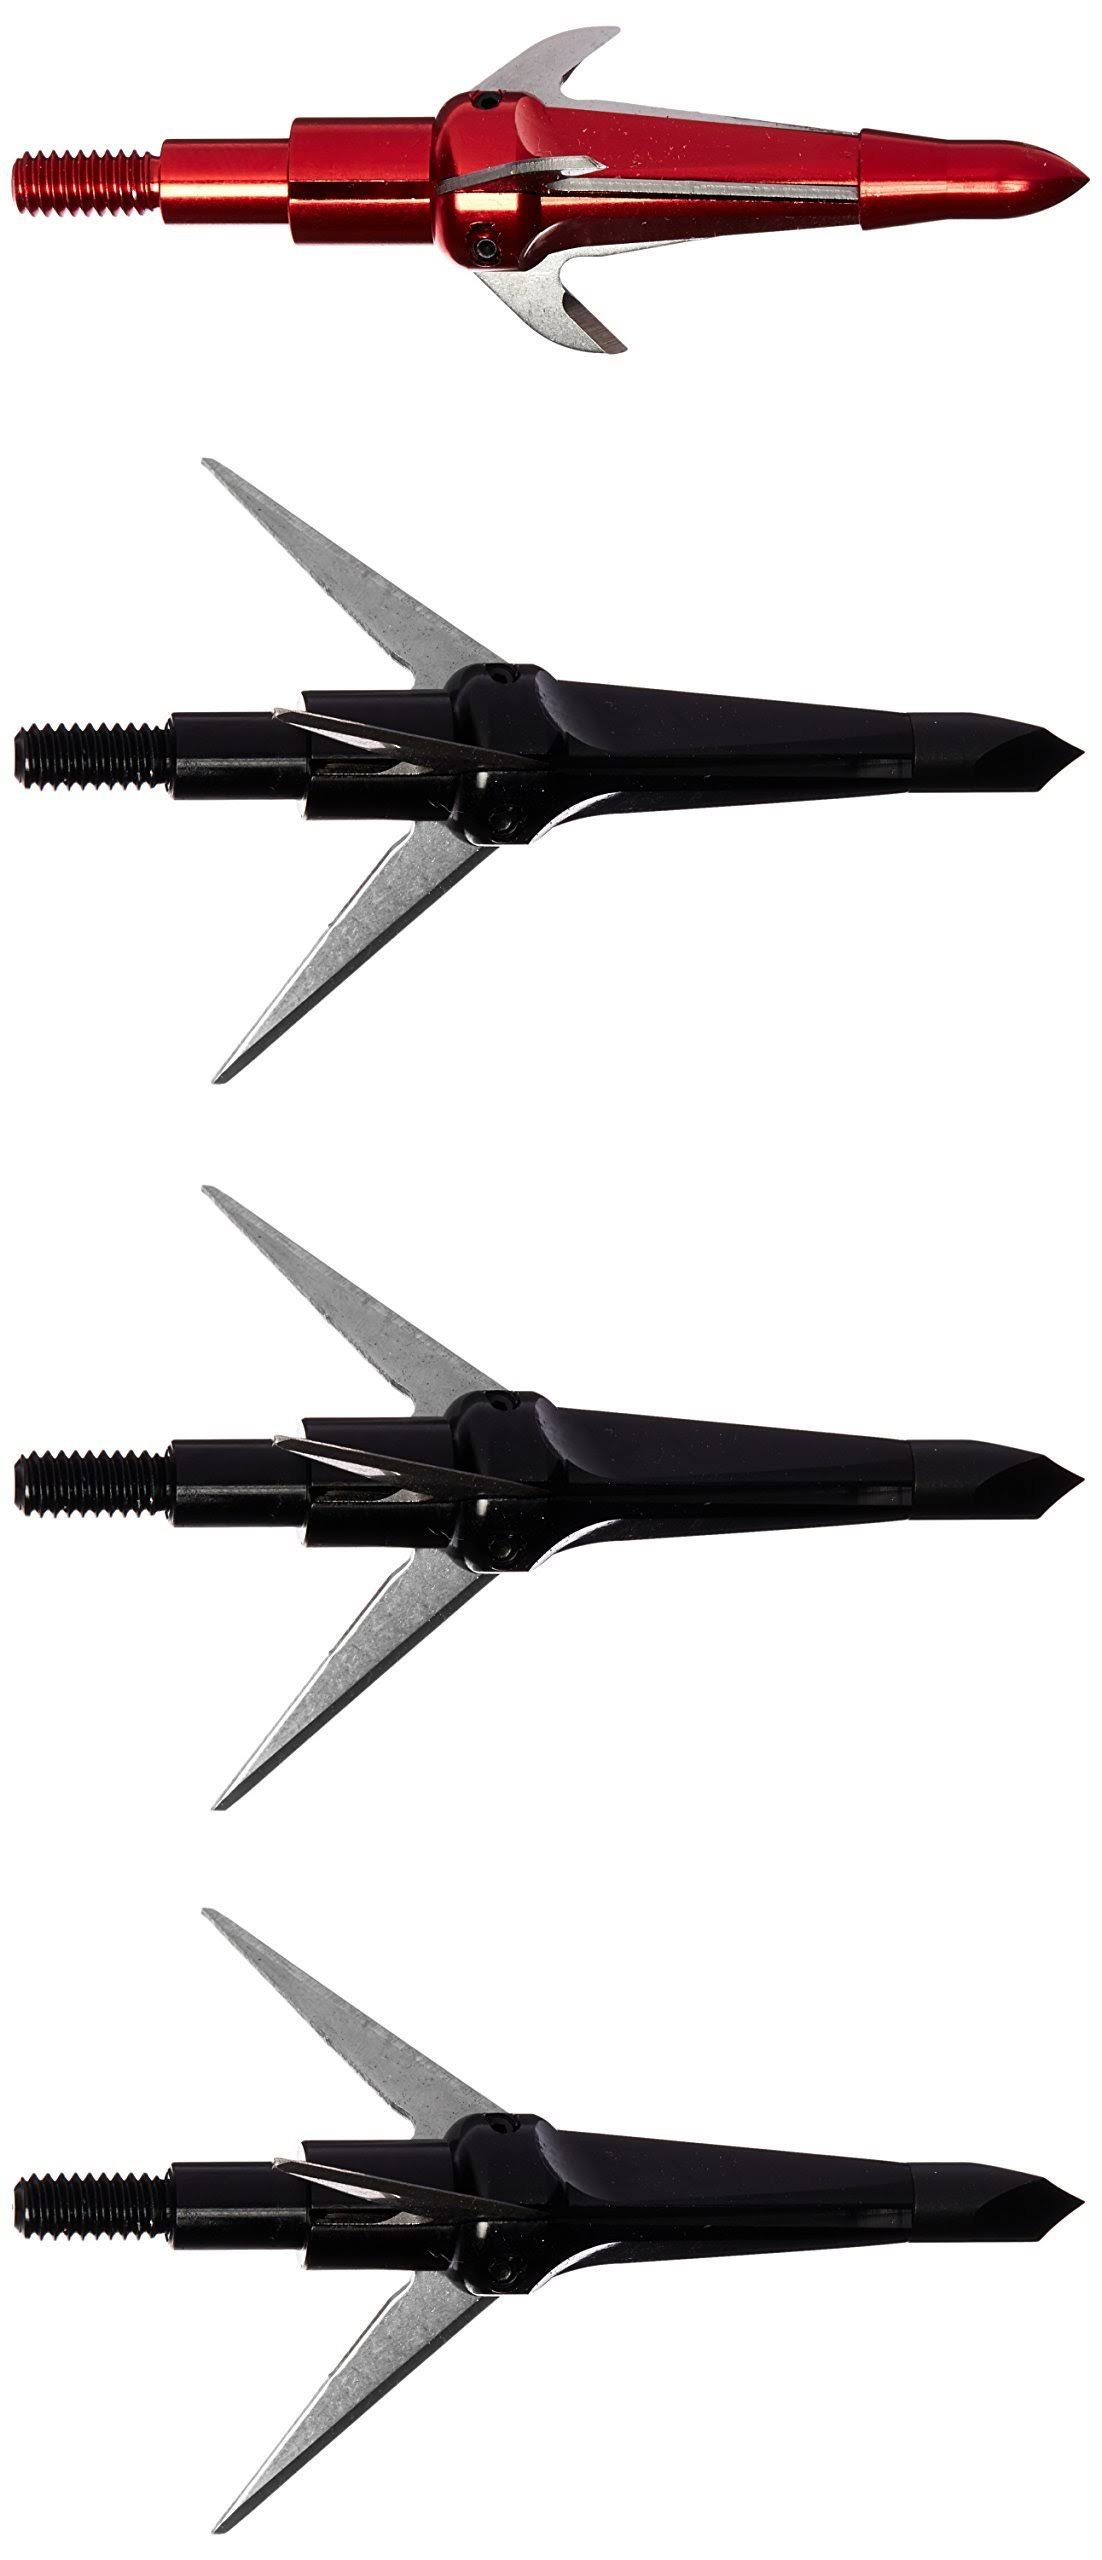 Swhacker 3 Blade Broadhead - Black, 100g, 1.5", 3pk